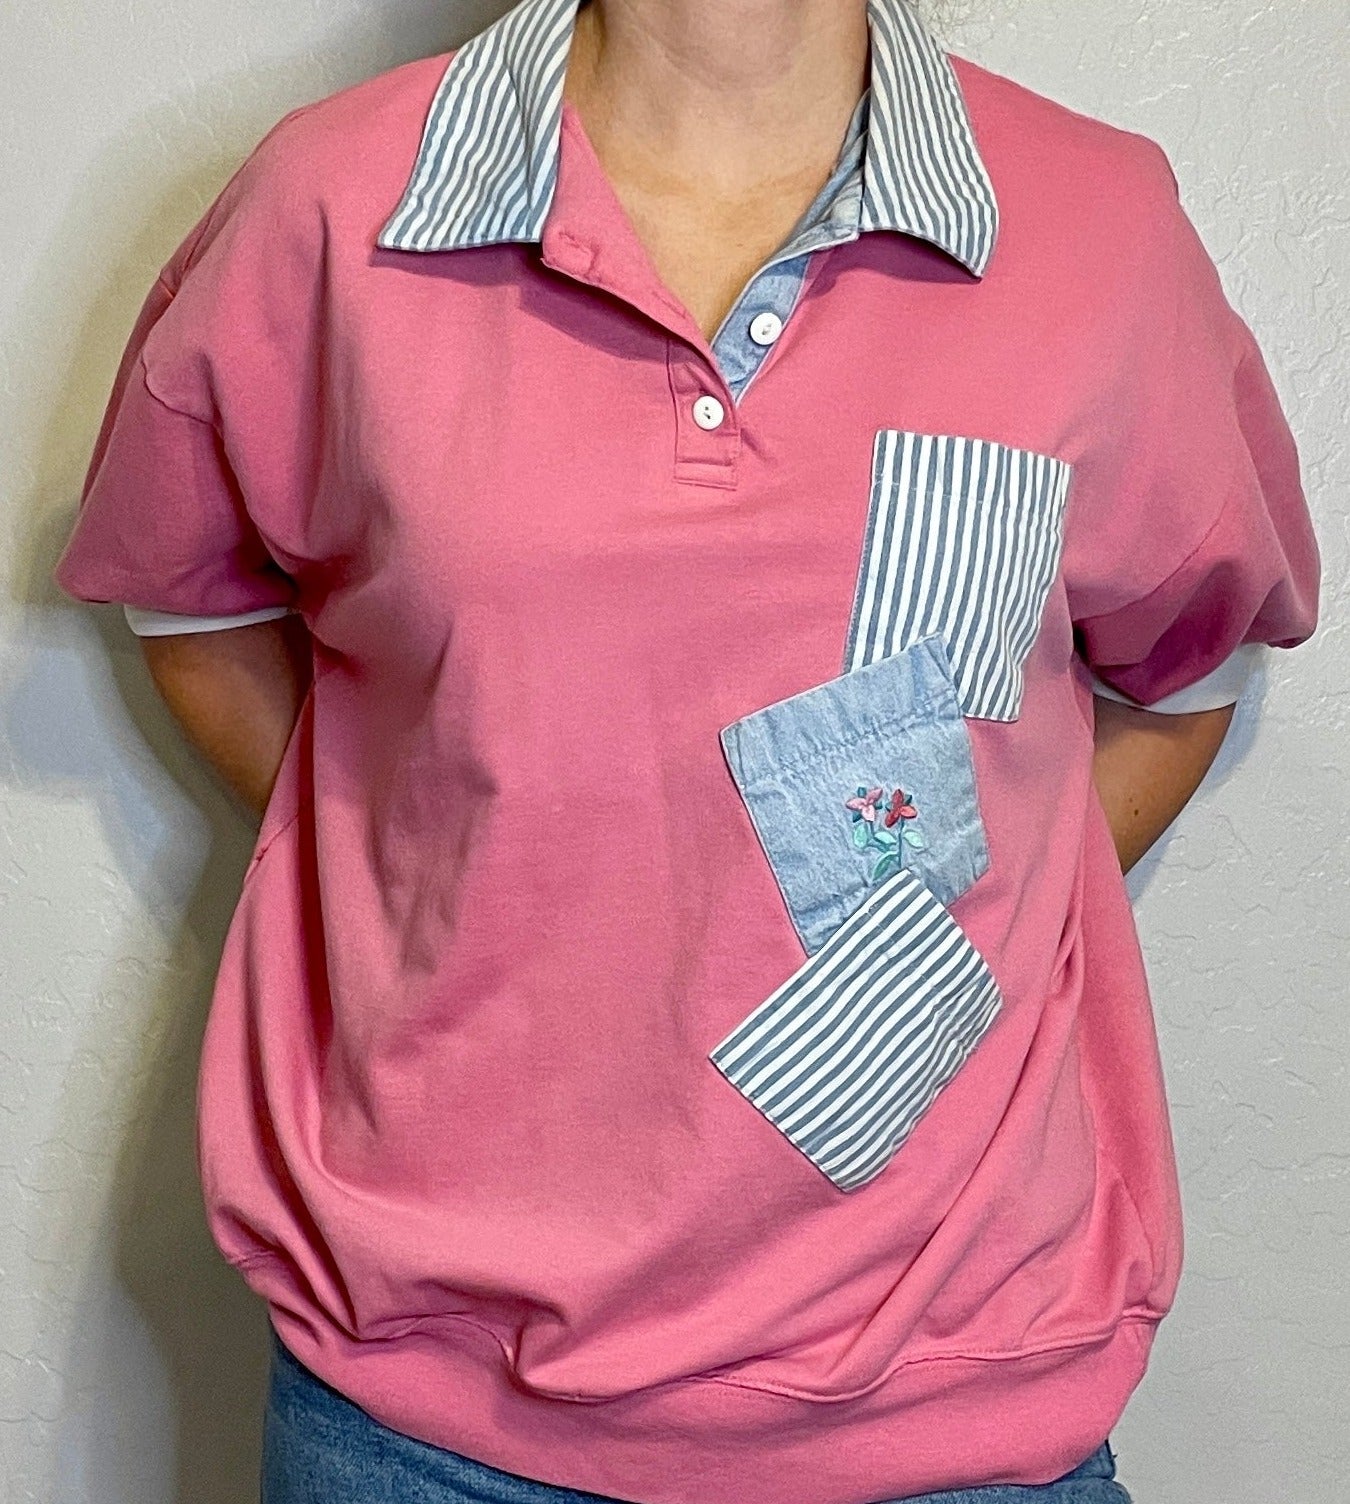 90's light pink & denim shirt with pockets